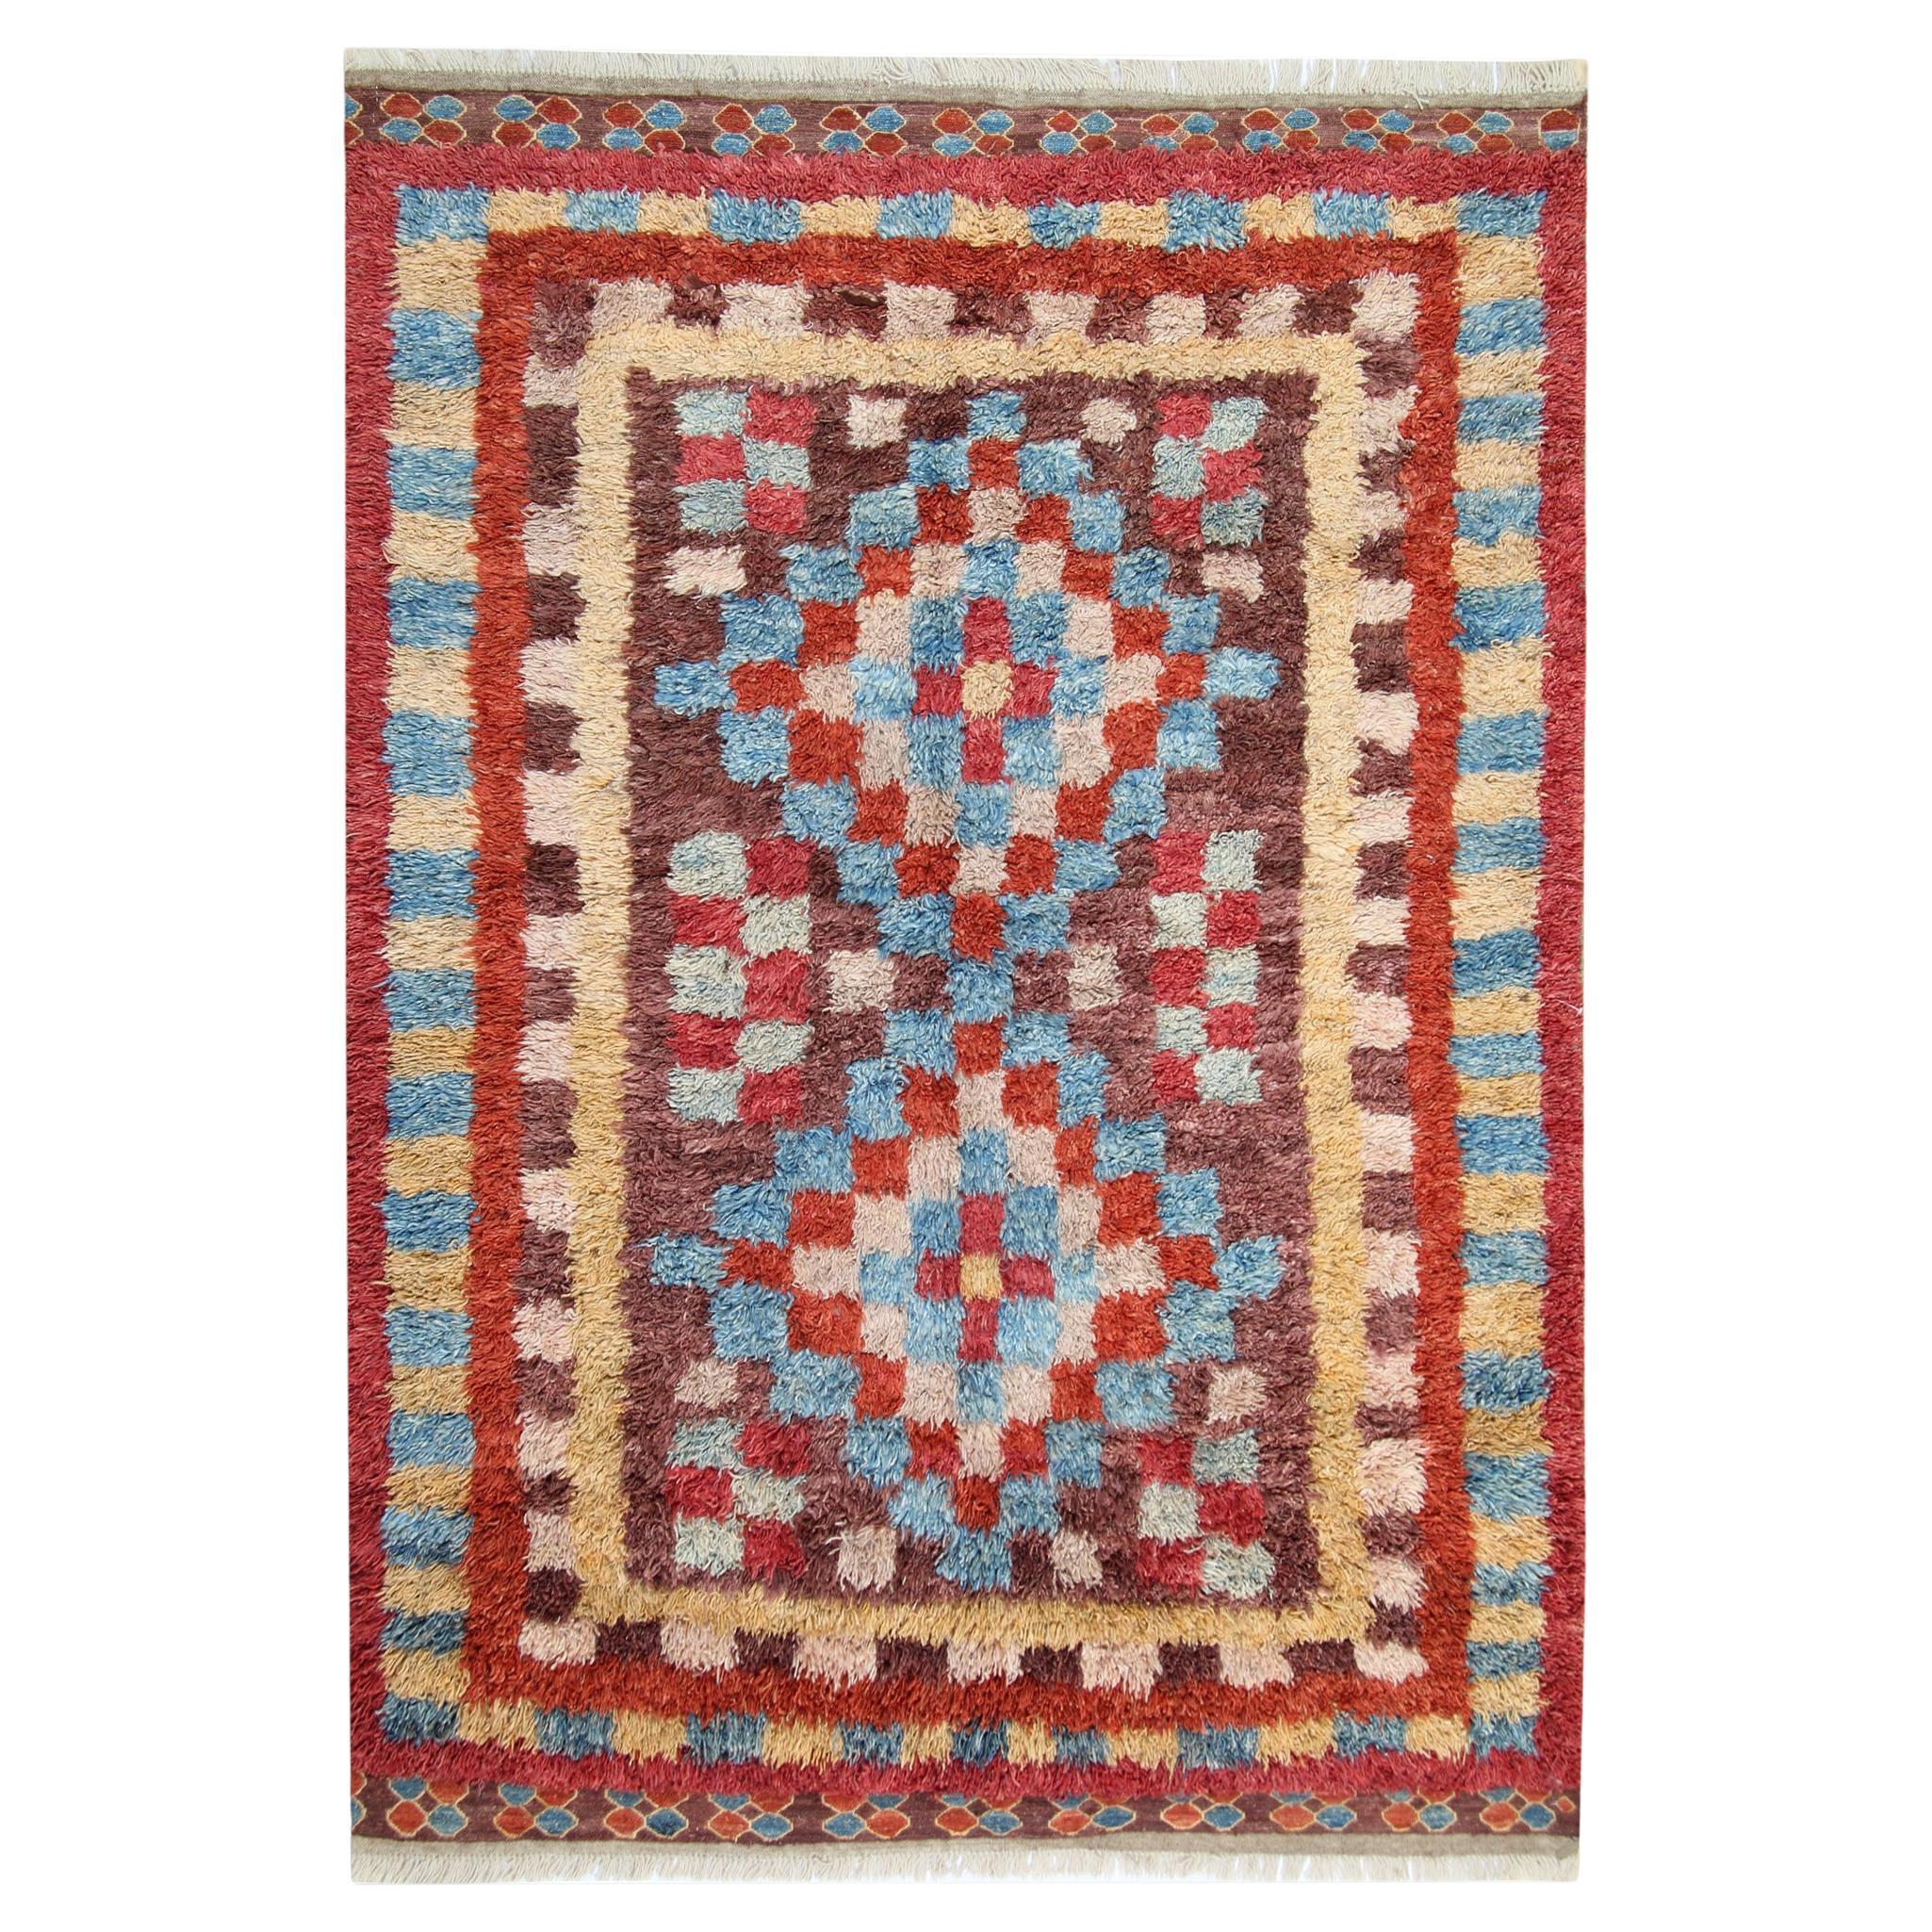 Tapis marocains faits main, tapis à poils longs, tapis primitifs roses et rouges à vendre